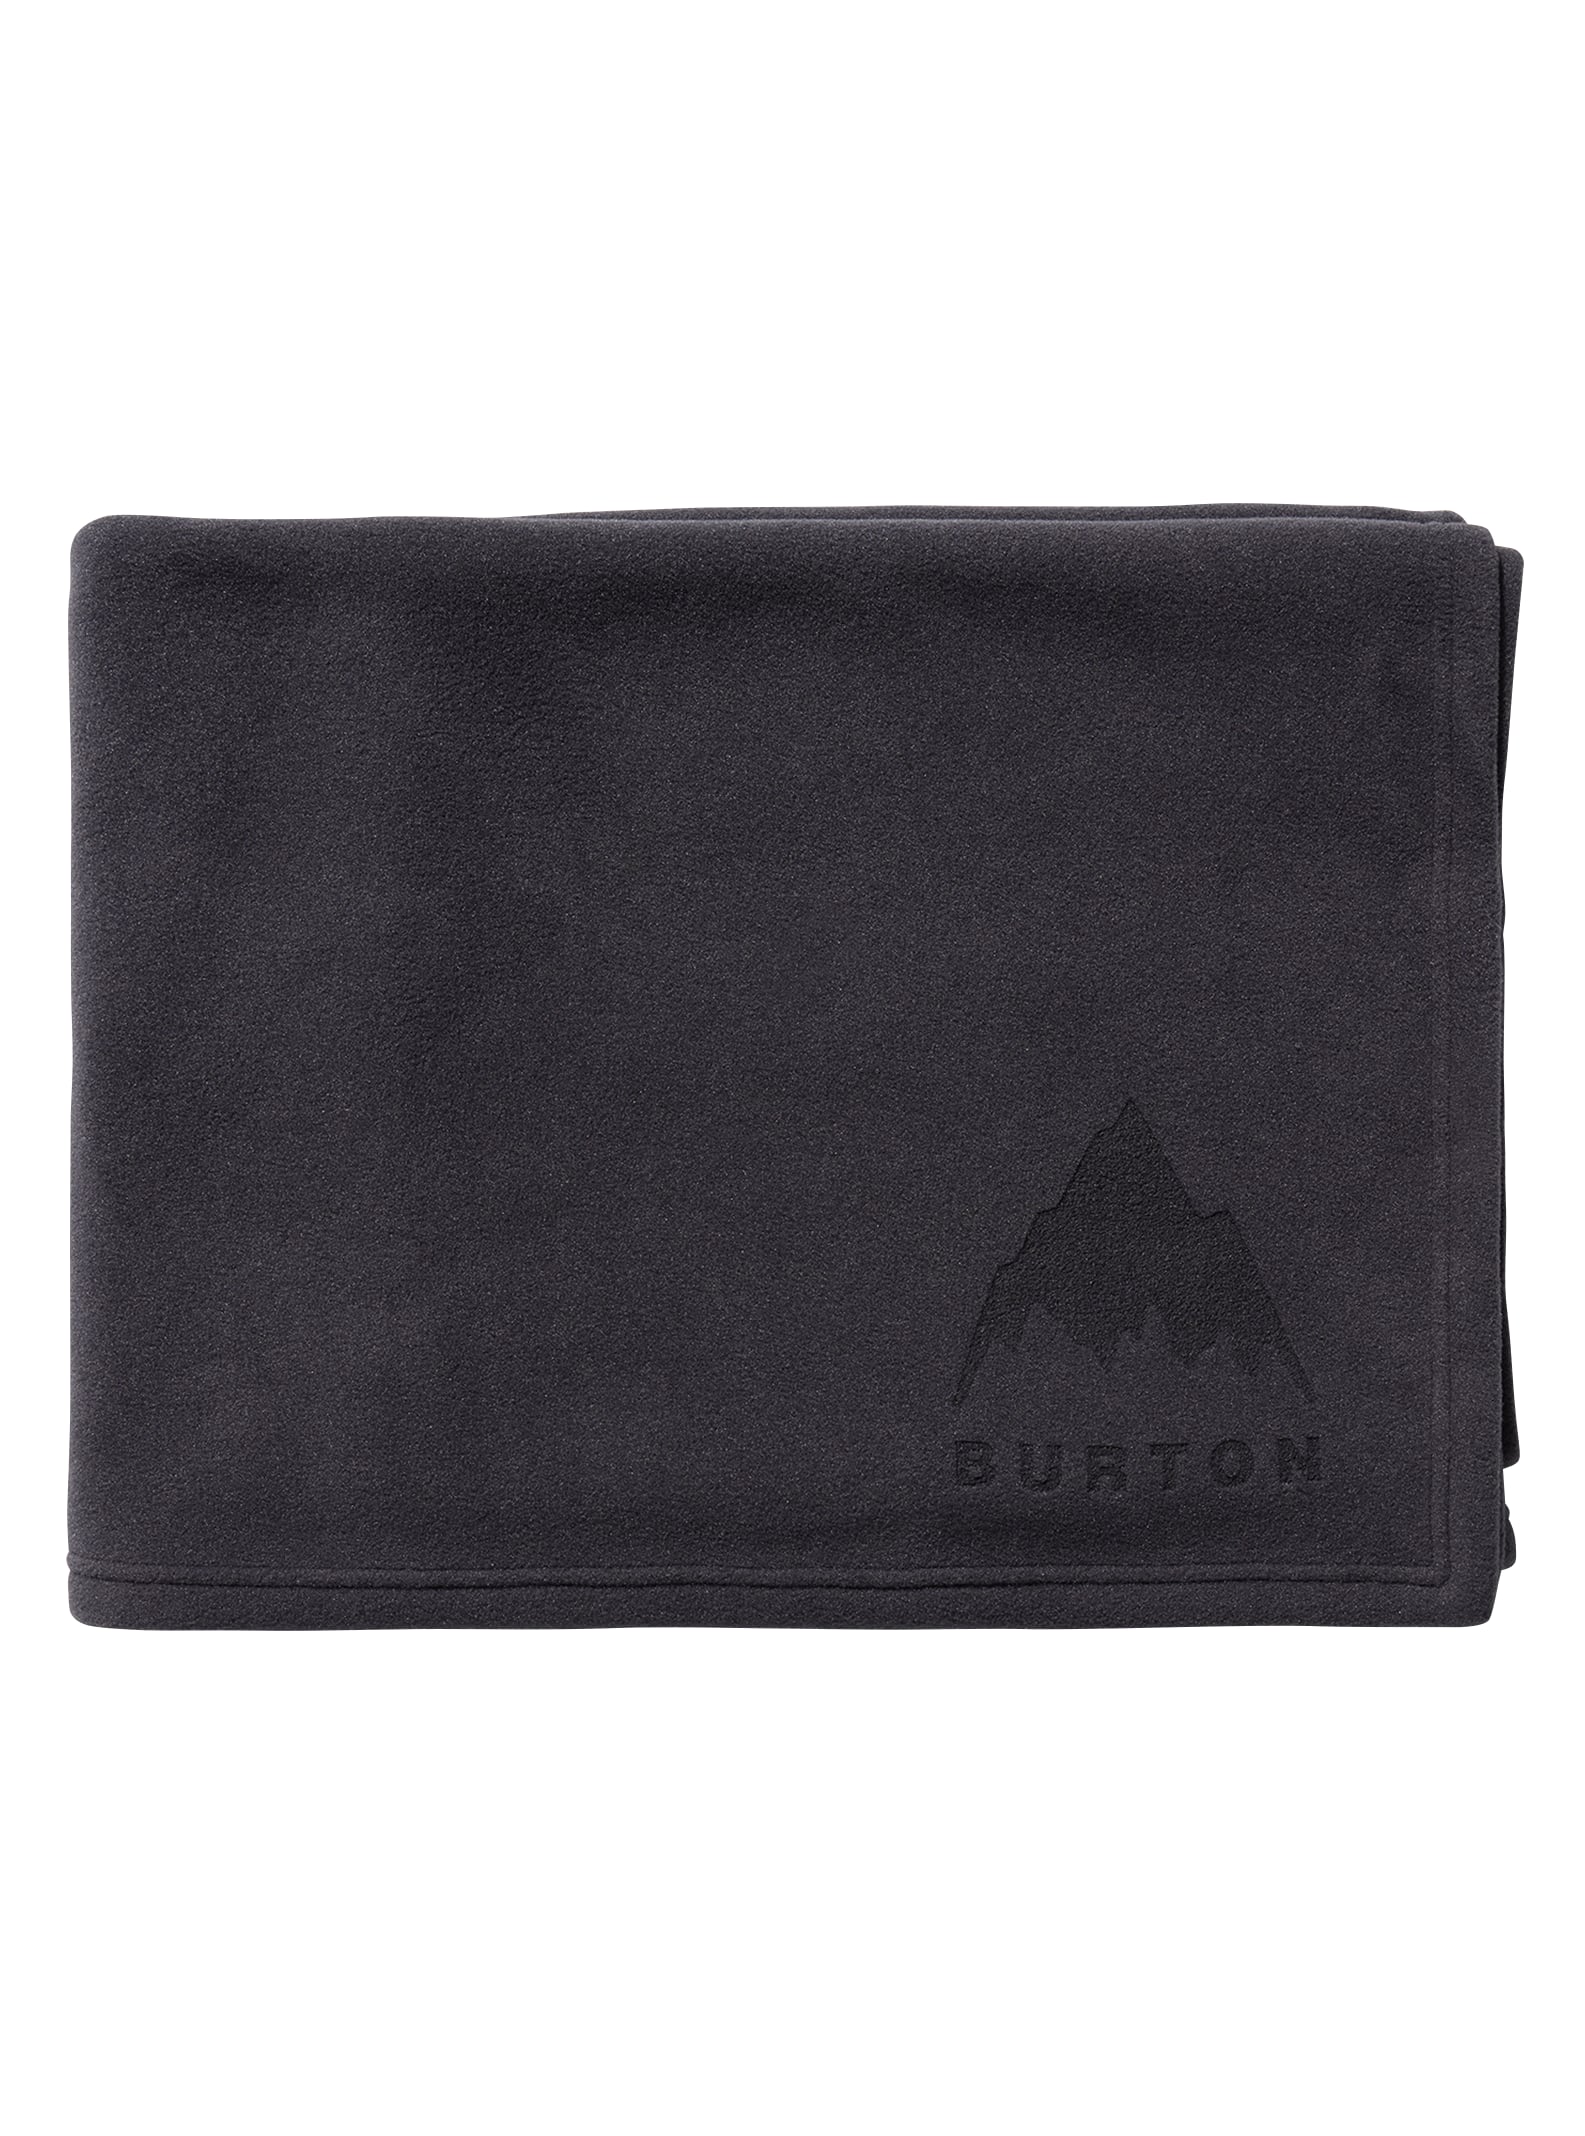 Burton Lounge Blanket